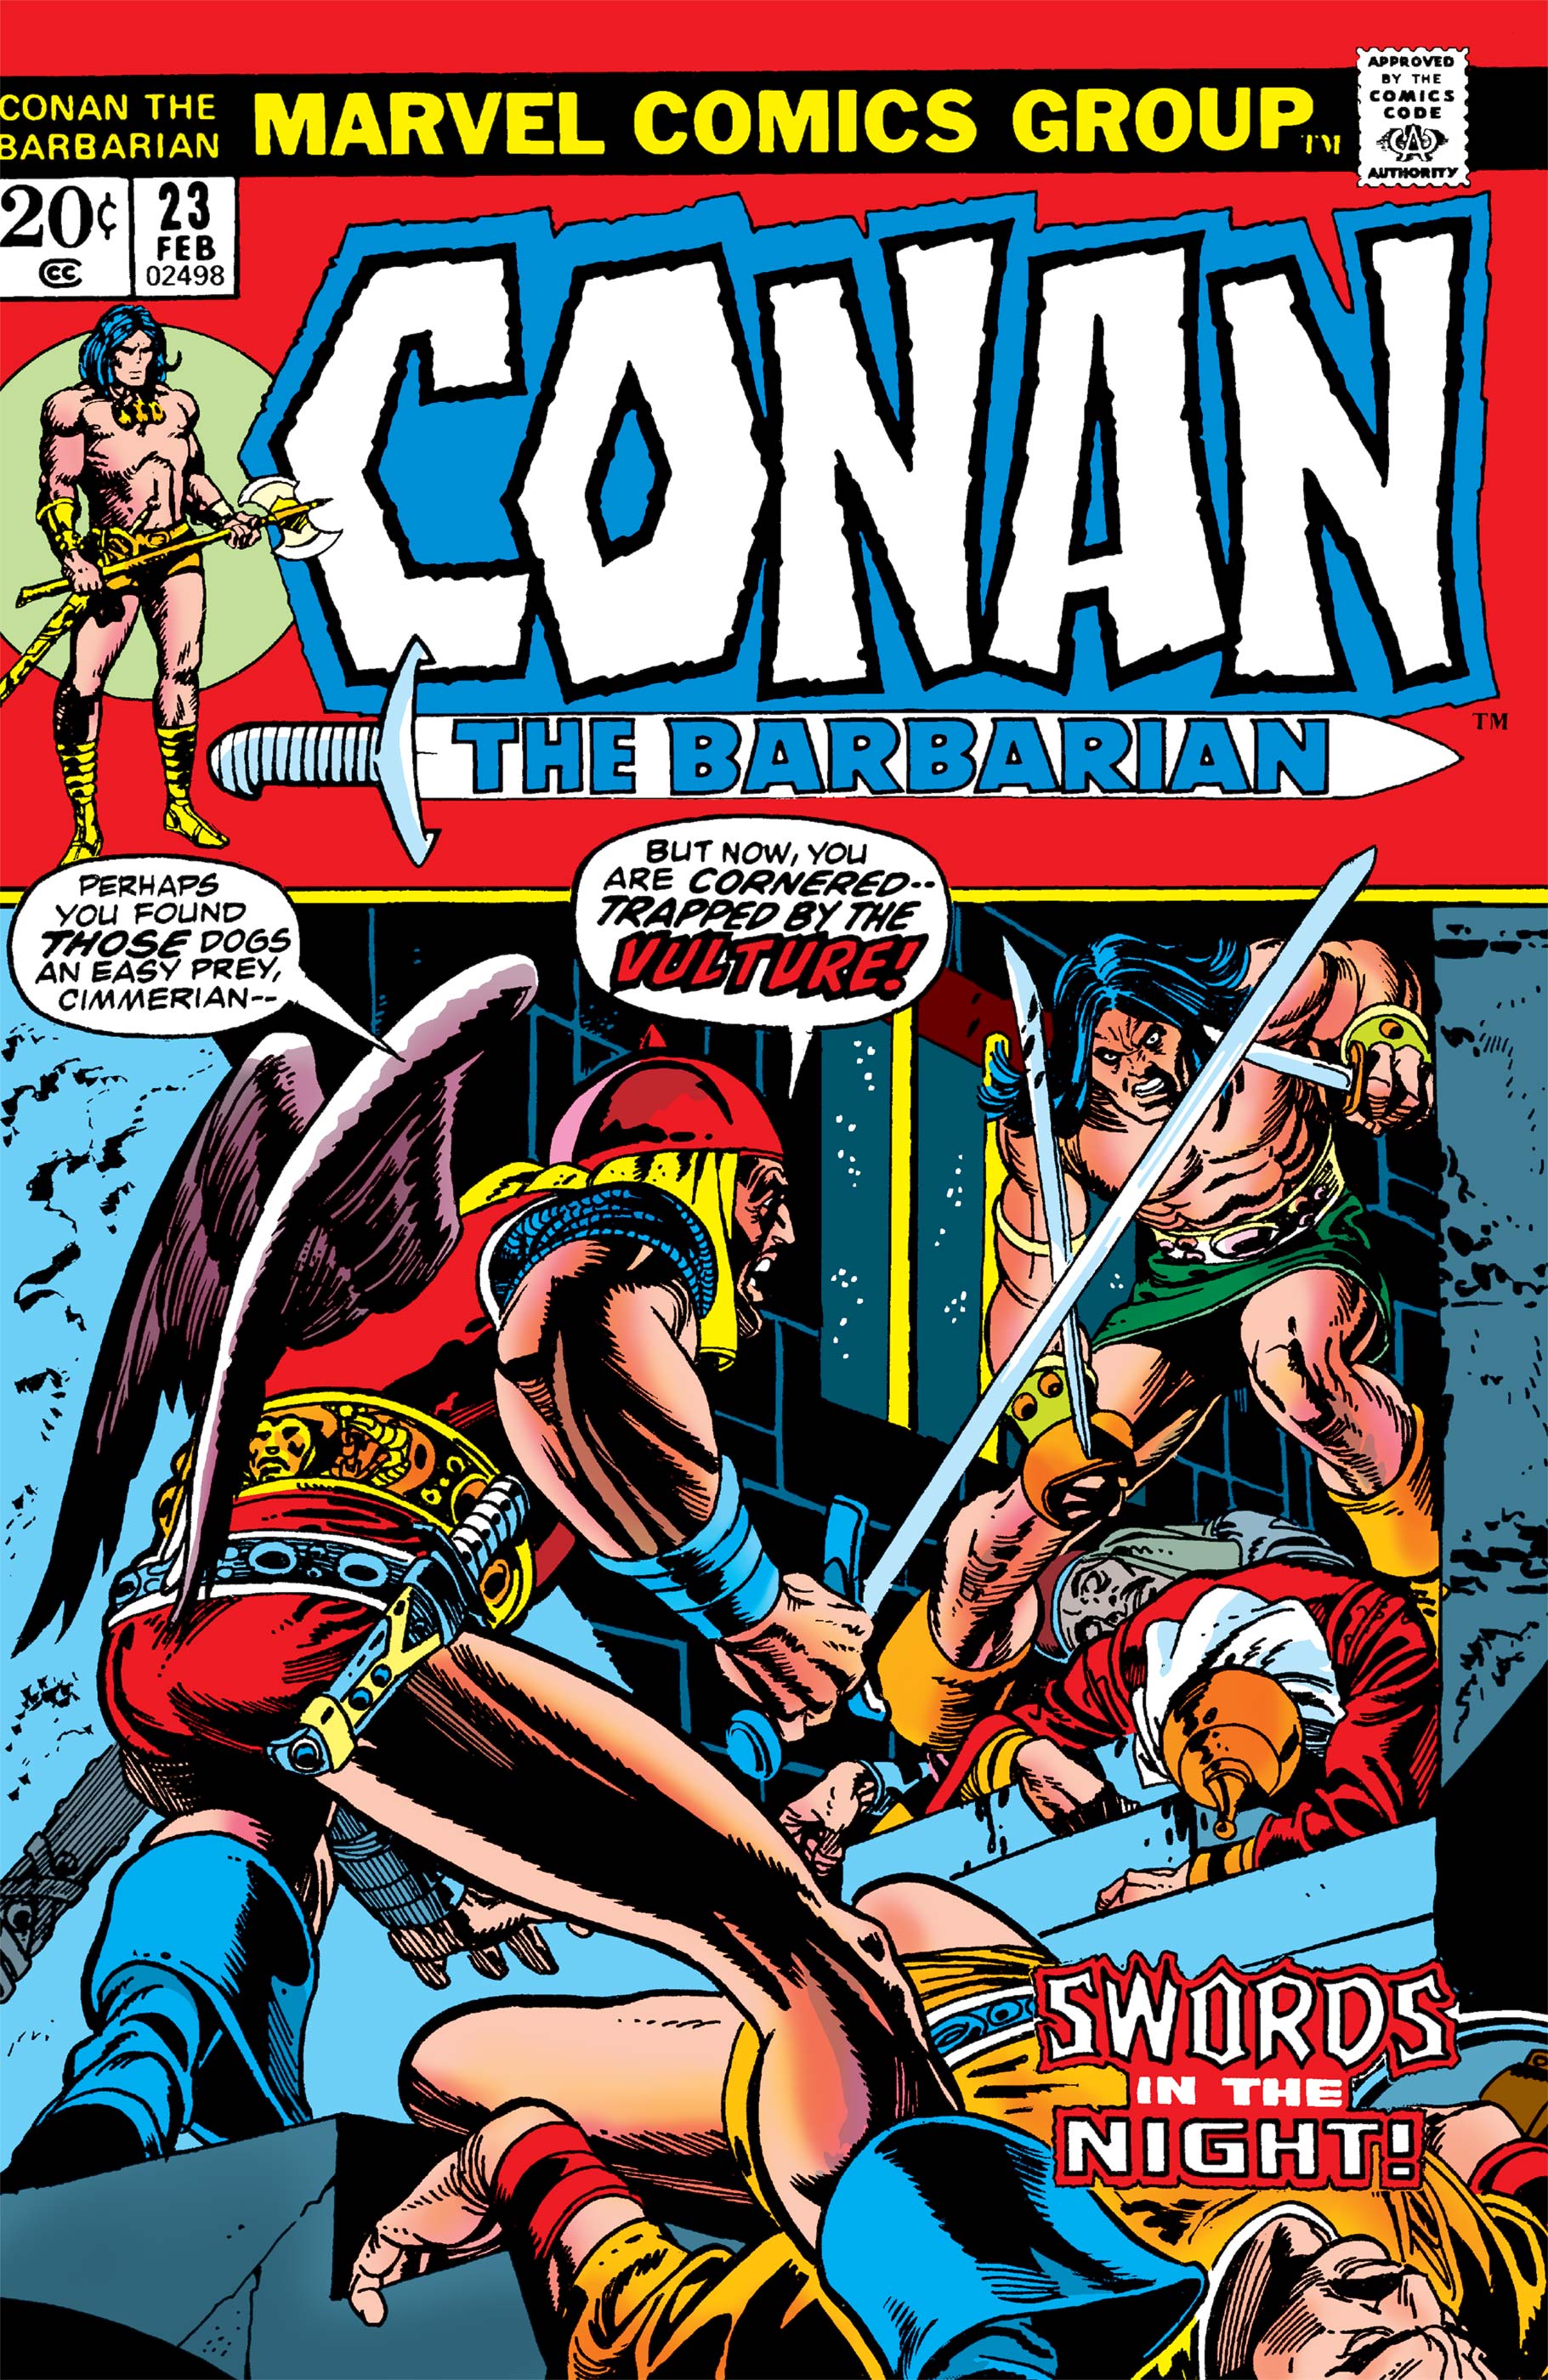 Conan the Barbarian (1970) #23